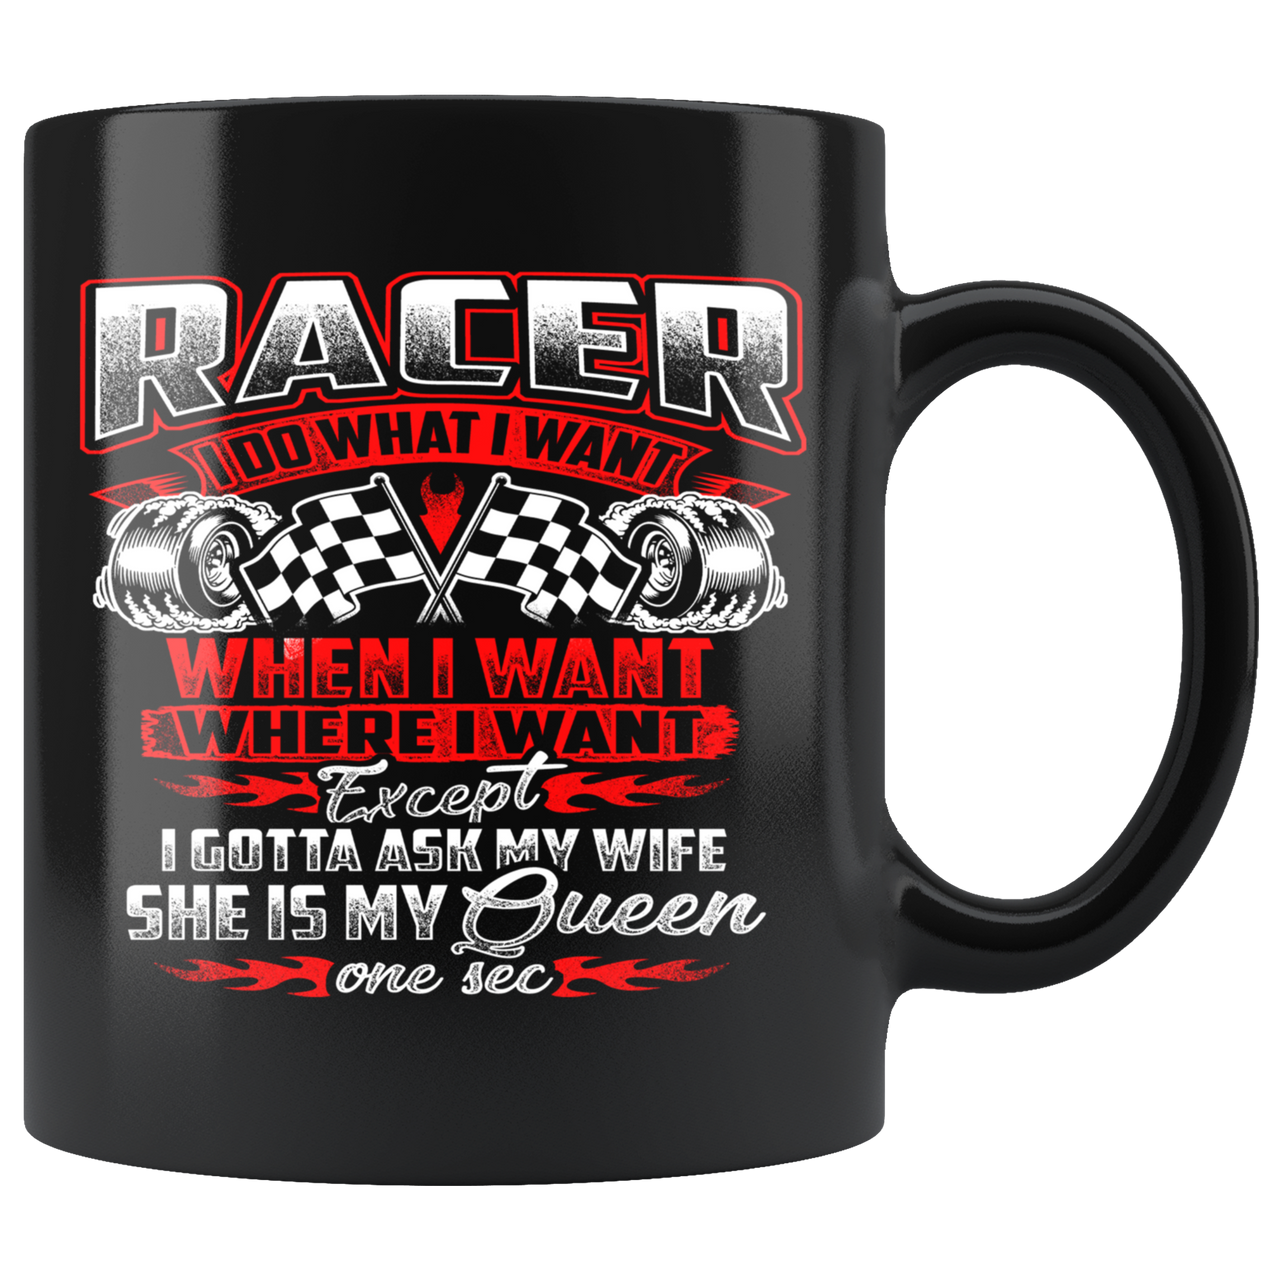 Racer I Do What I Want When I Want Mug!